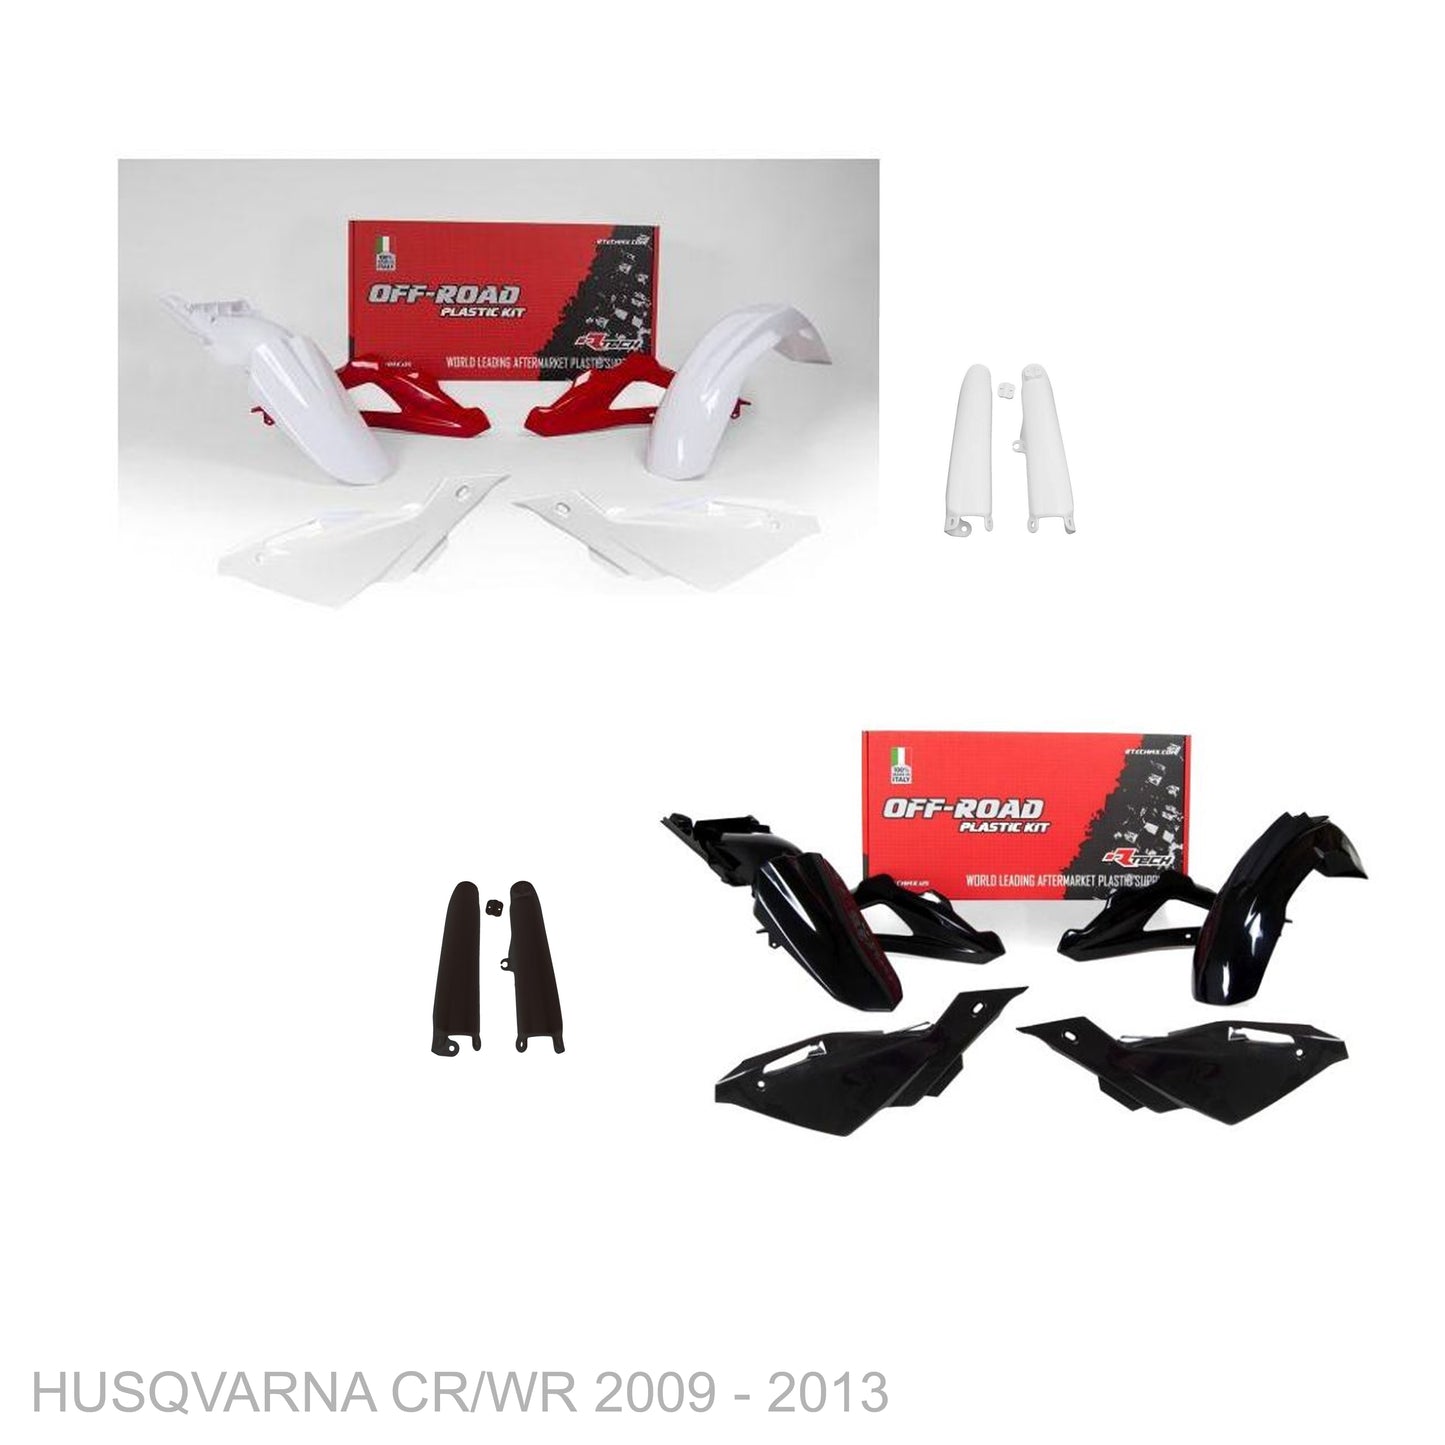 HUSQVARNA CR/WR 125 2009 - 2013 Start From Scratch Graphics Kit